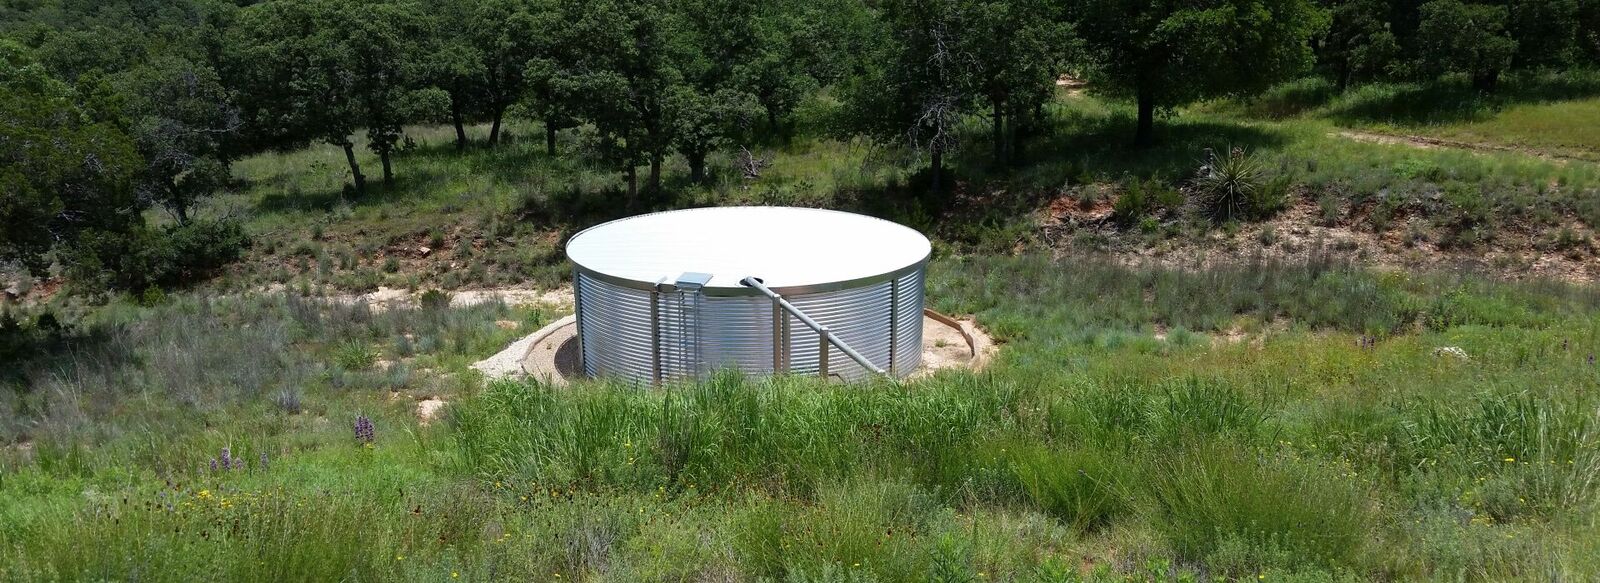 Well Water Storage Tank